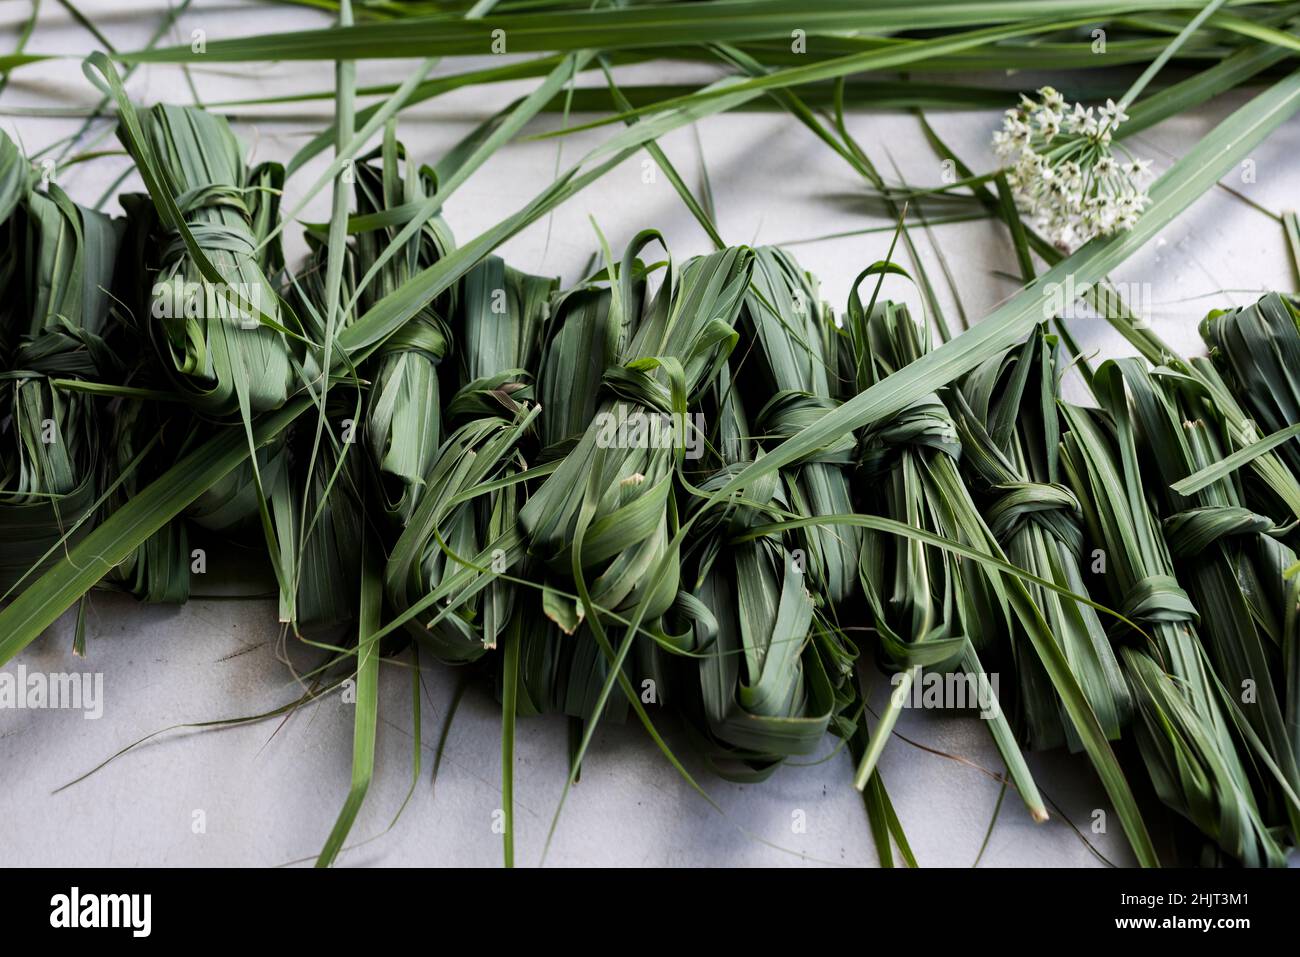 bundles of lemongrass on urban farm table Stock Photo